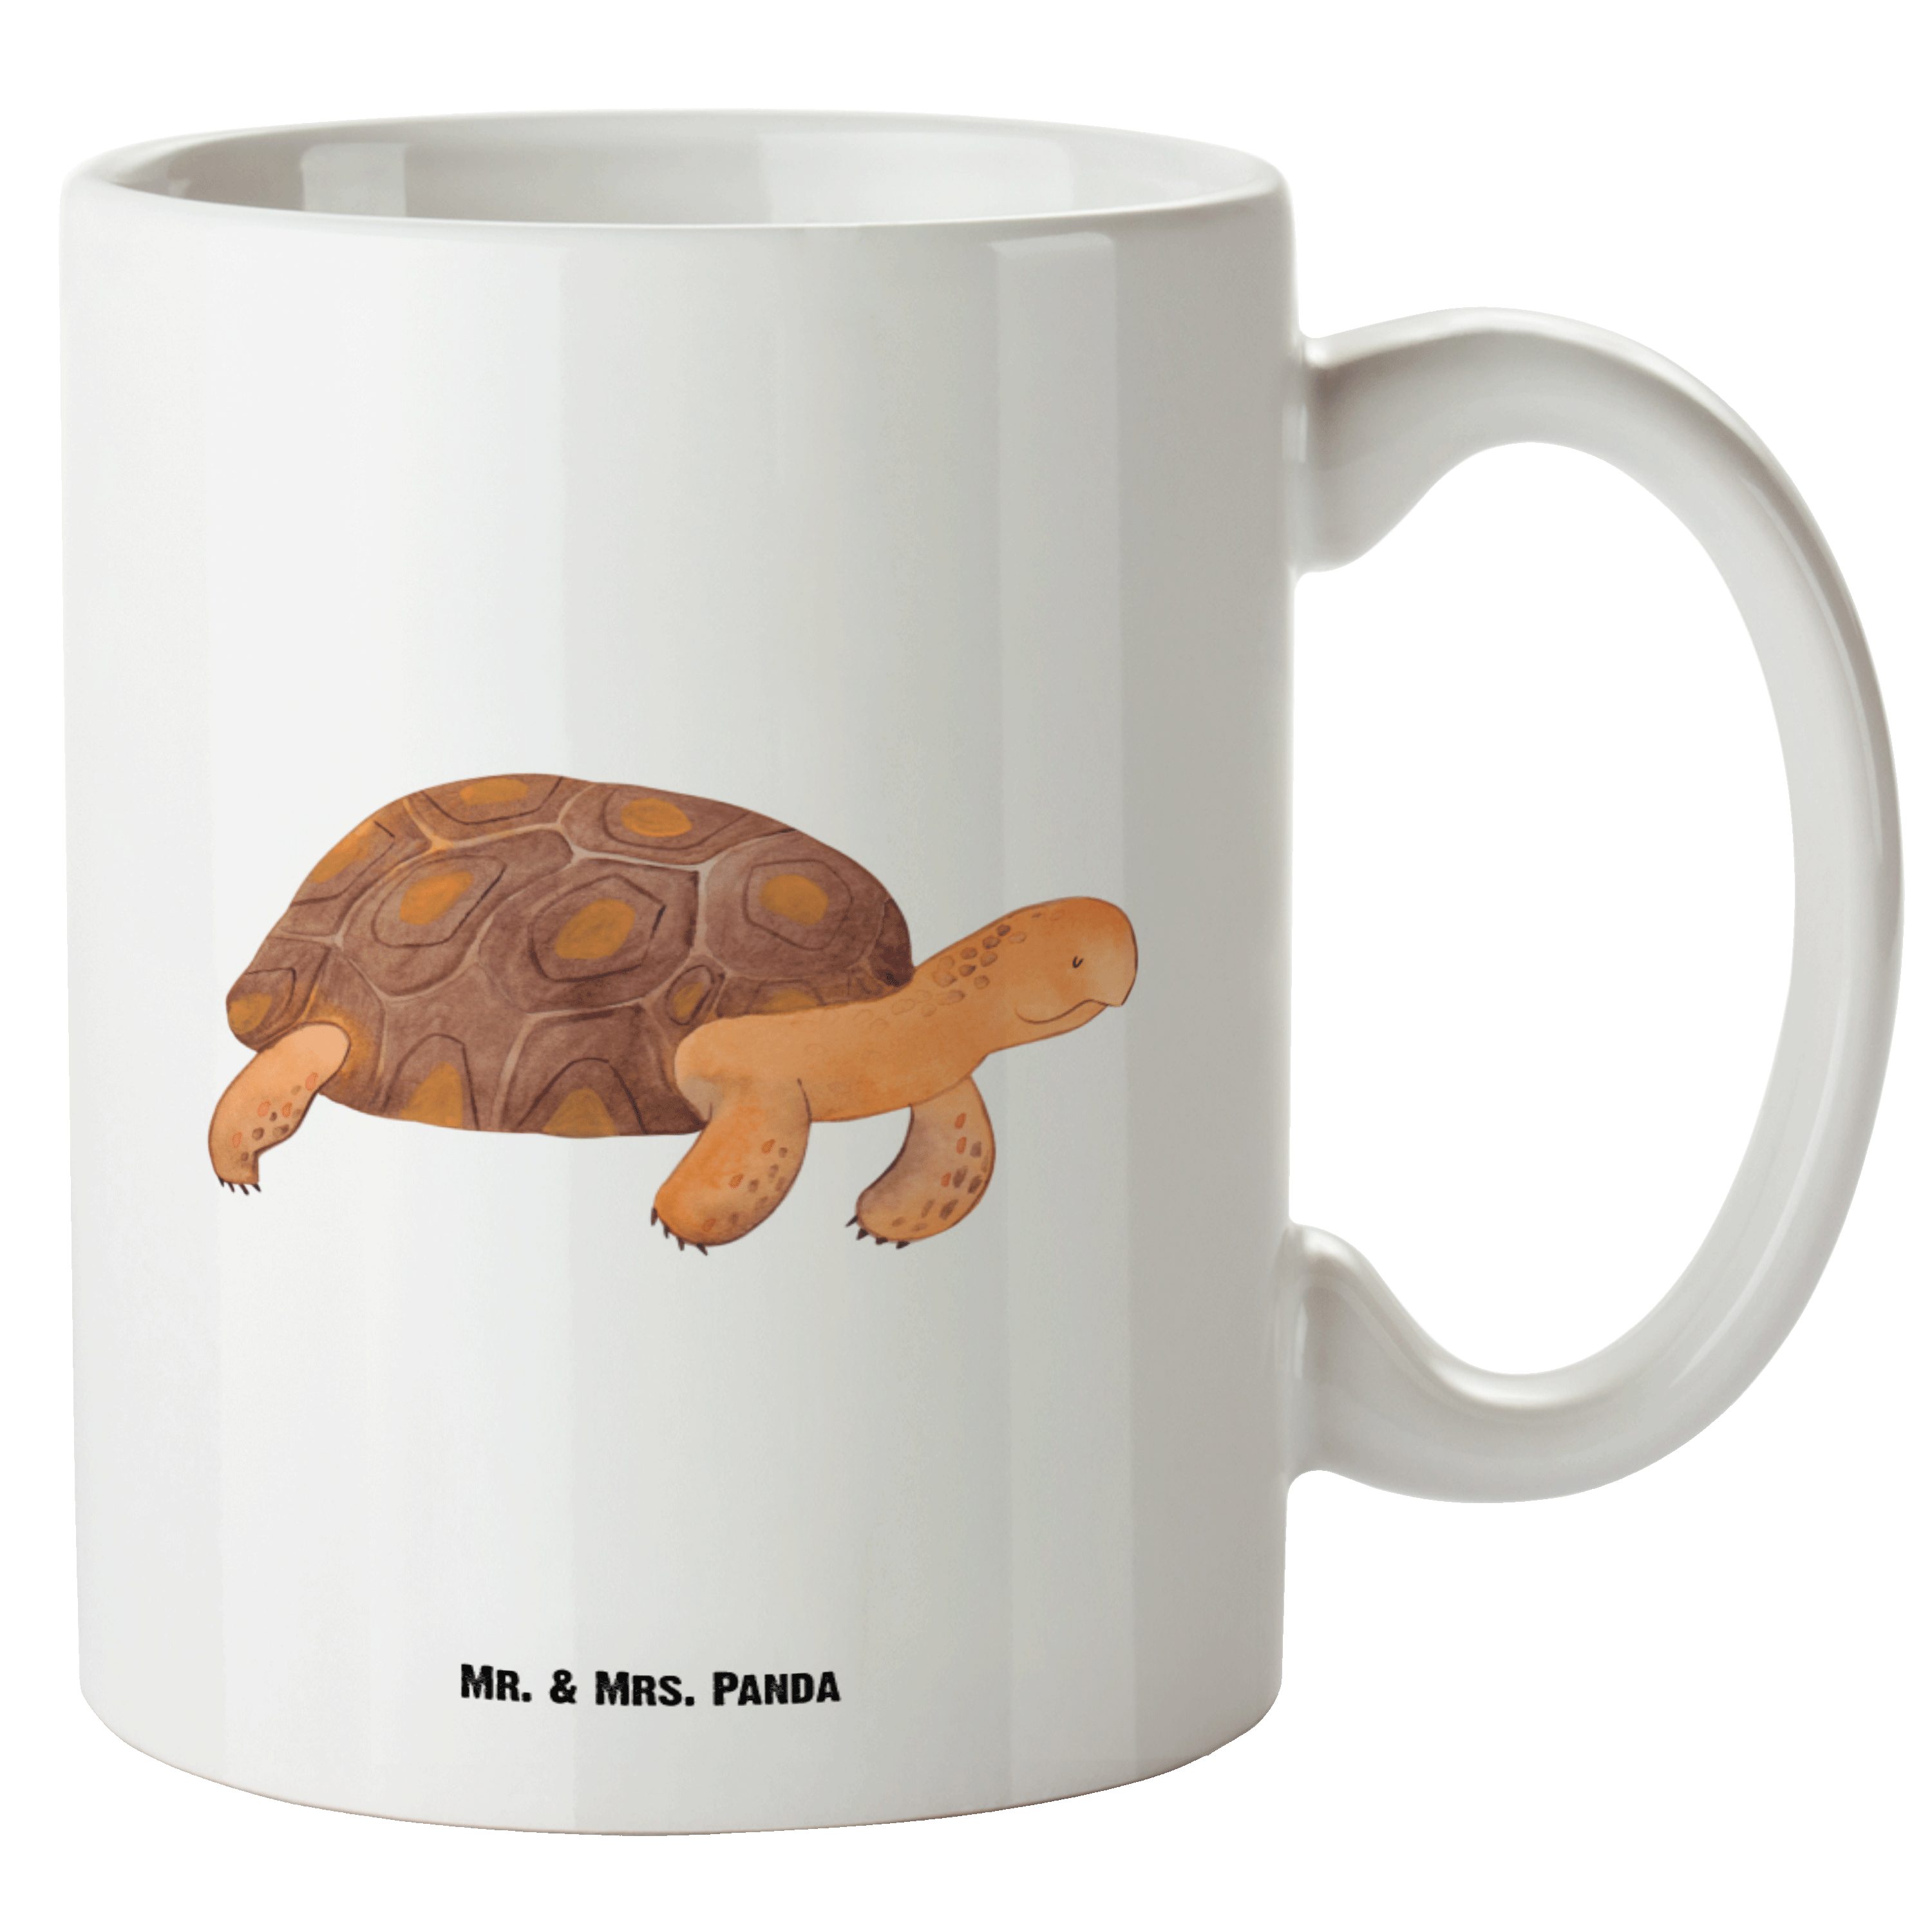 Mr. & Mrs. Panda Tasse Schildkröte marschiert - Weiß - Geschenk, Grosse Kaffeetasse, Lieblin, XL Tasse Keramik